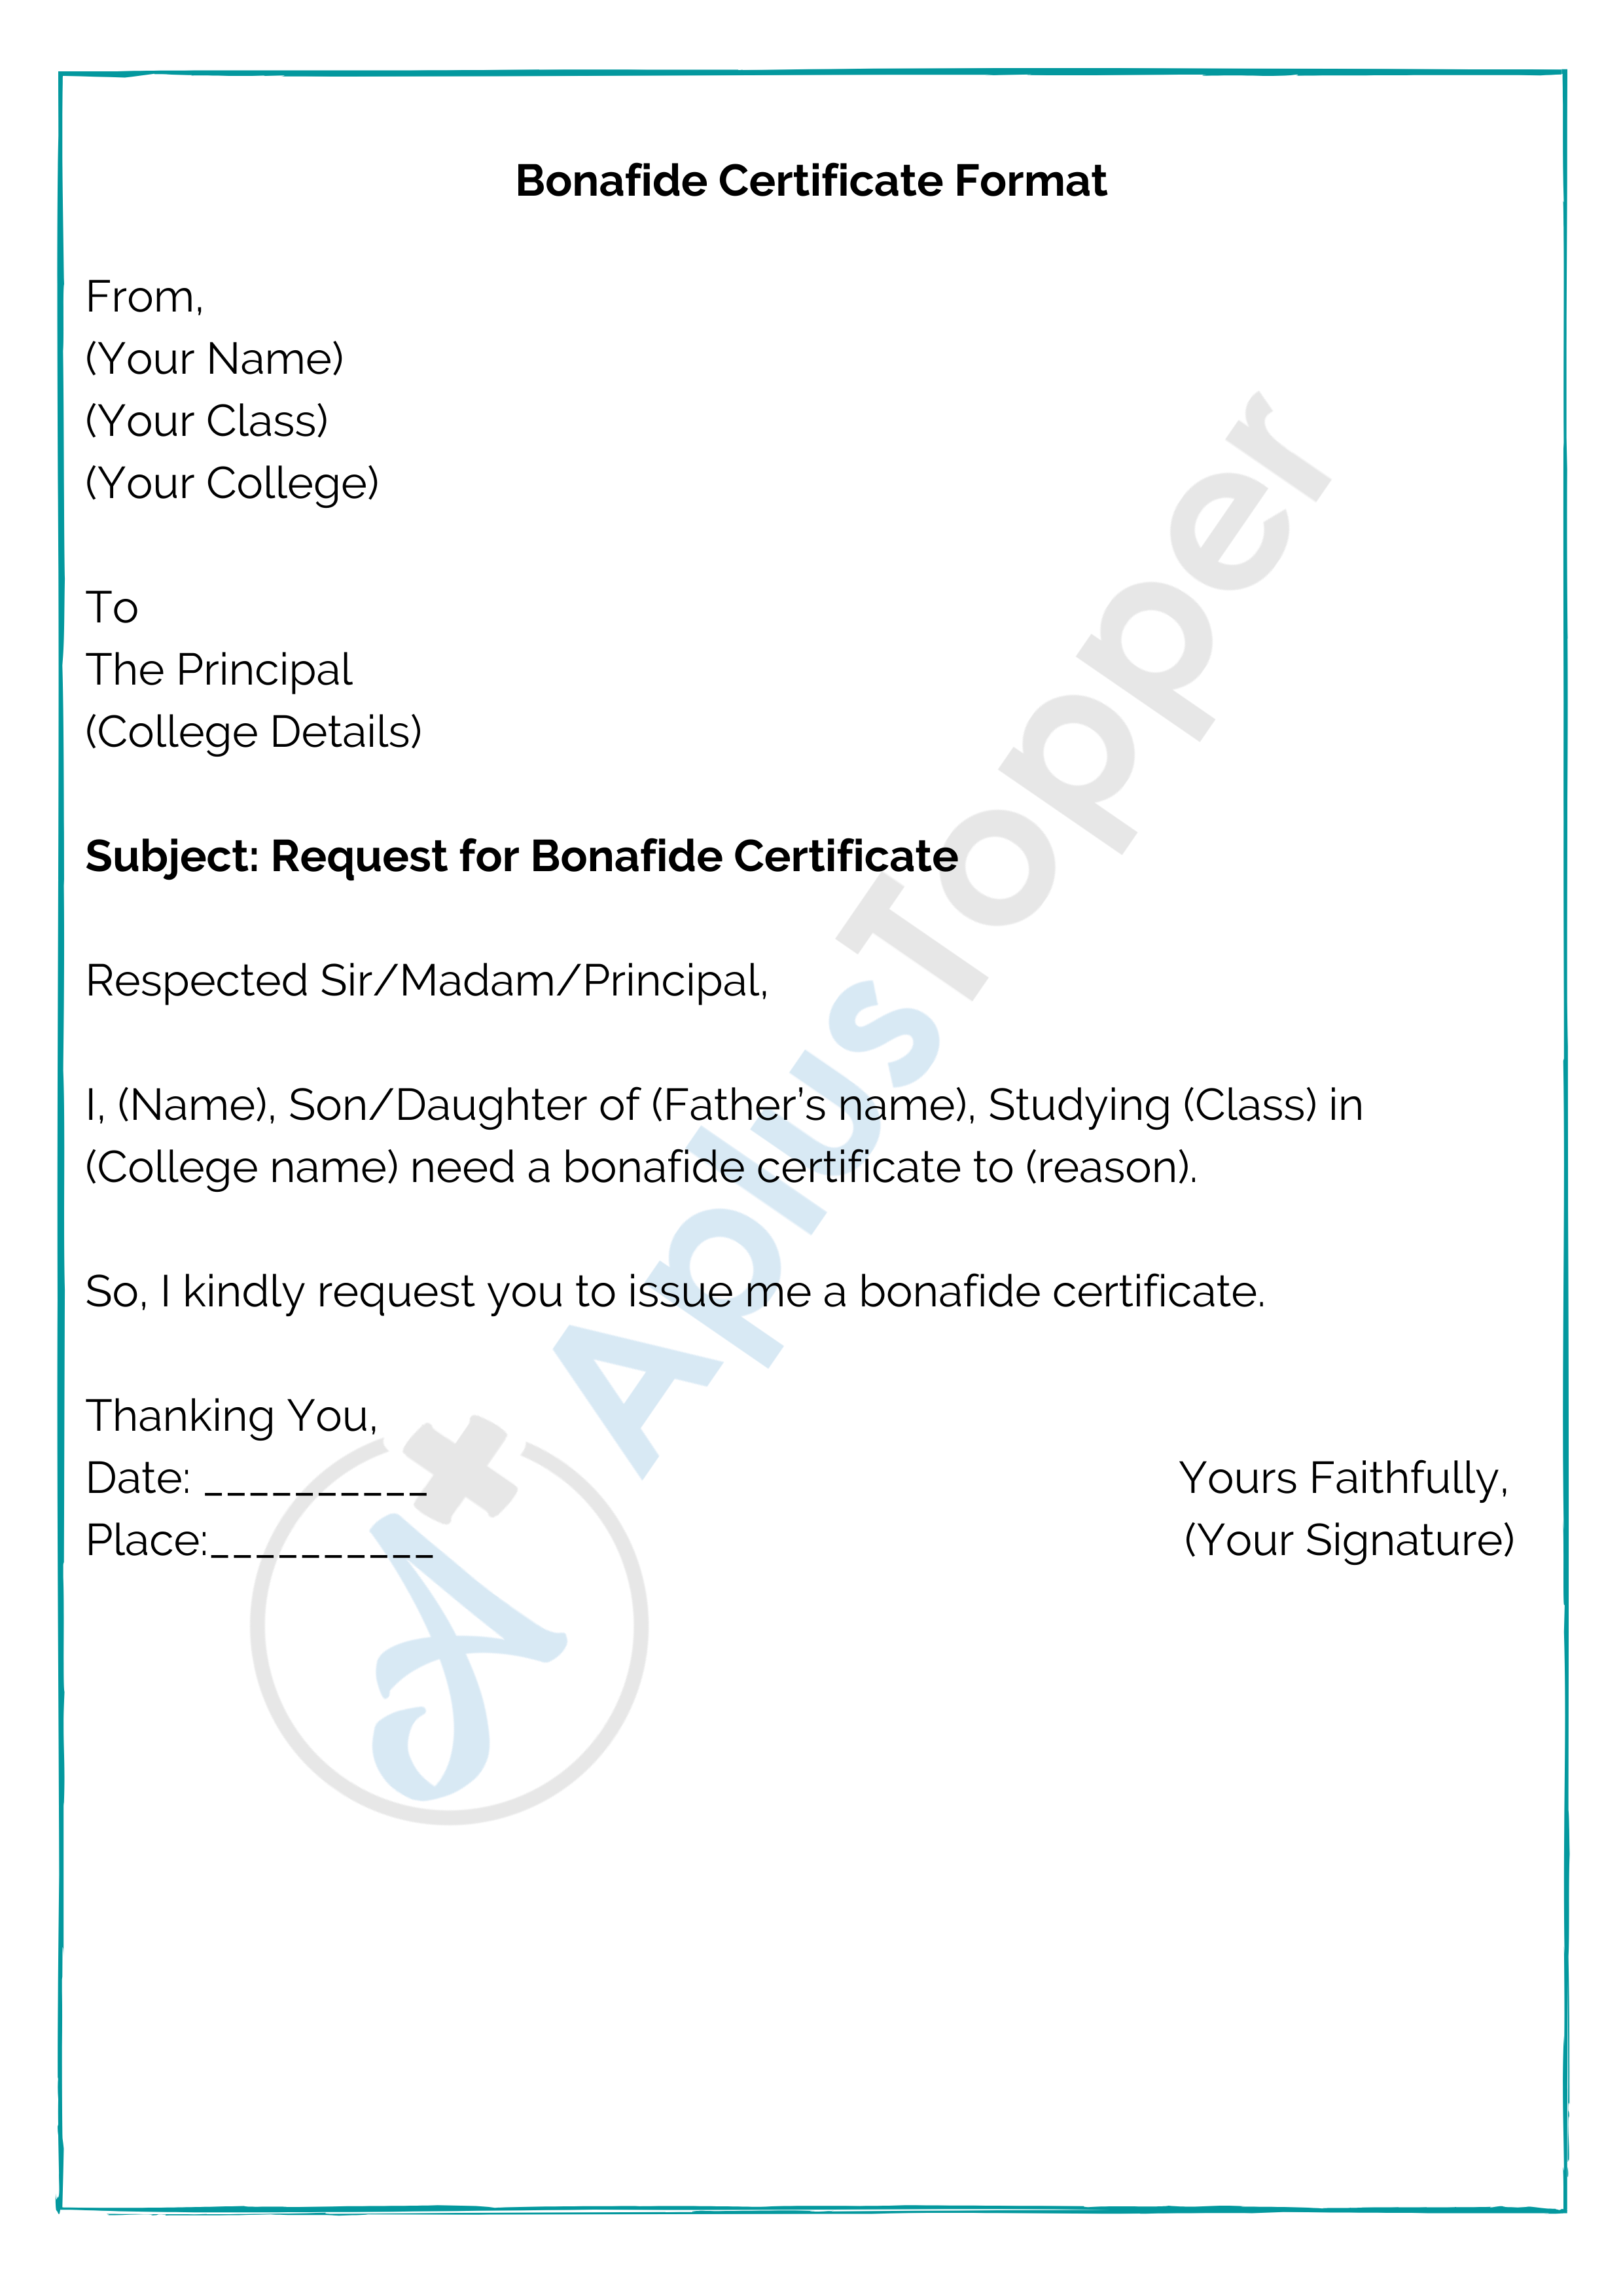 Bonafide Certificate Format